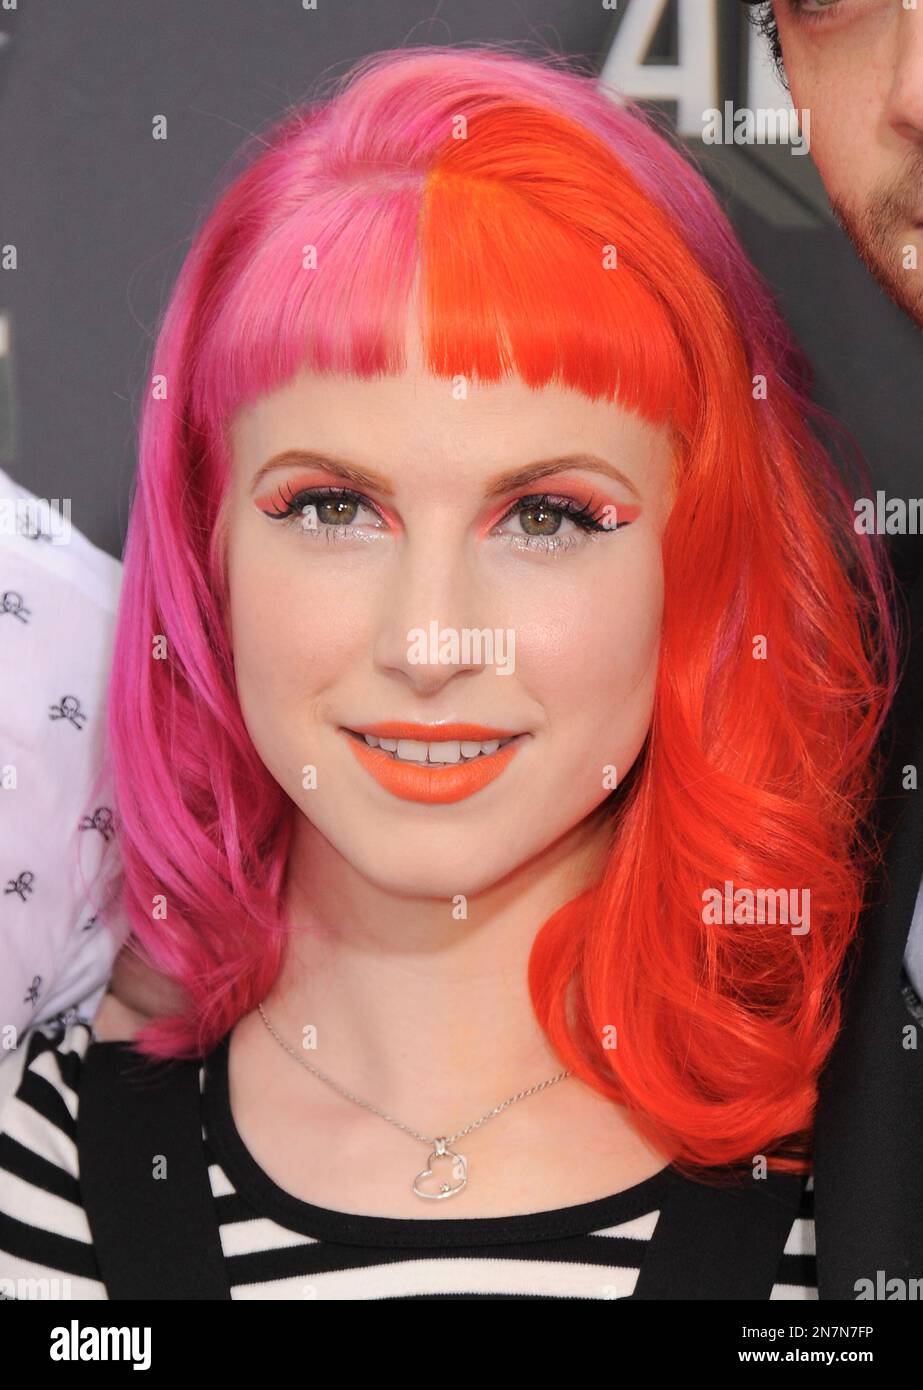 hayley williams pink and orange hair